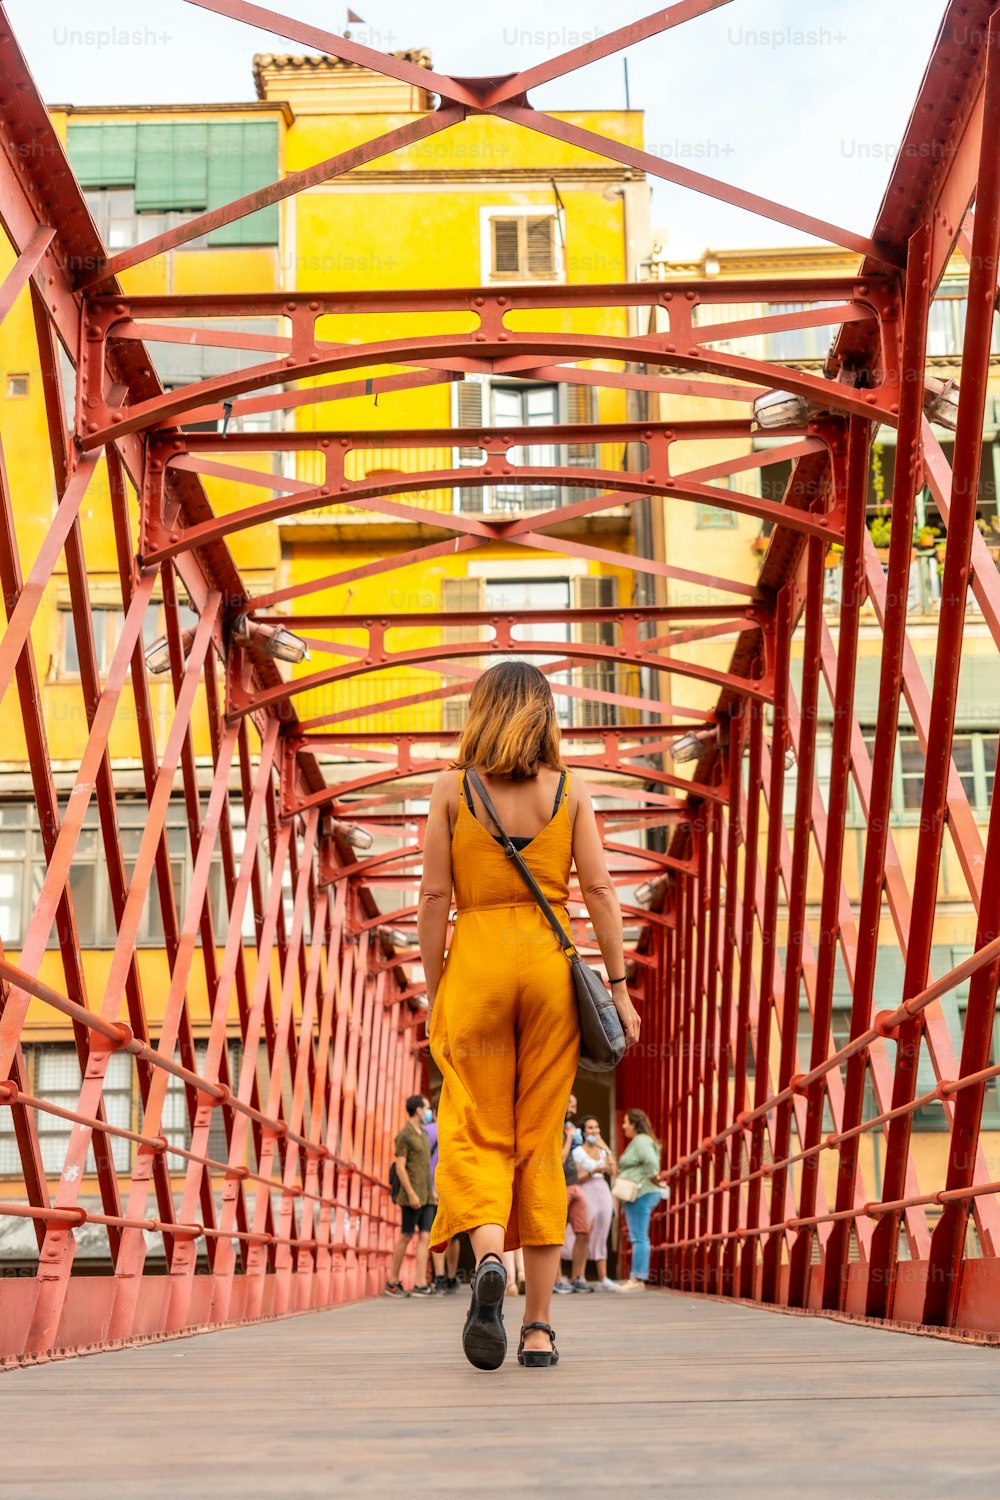 Girona ciudad medieval, un joven turista naranja en el famoso puente rojo Pont de les Peixateries Velles, Costa Brava de Cataluña